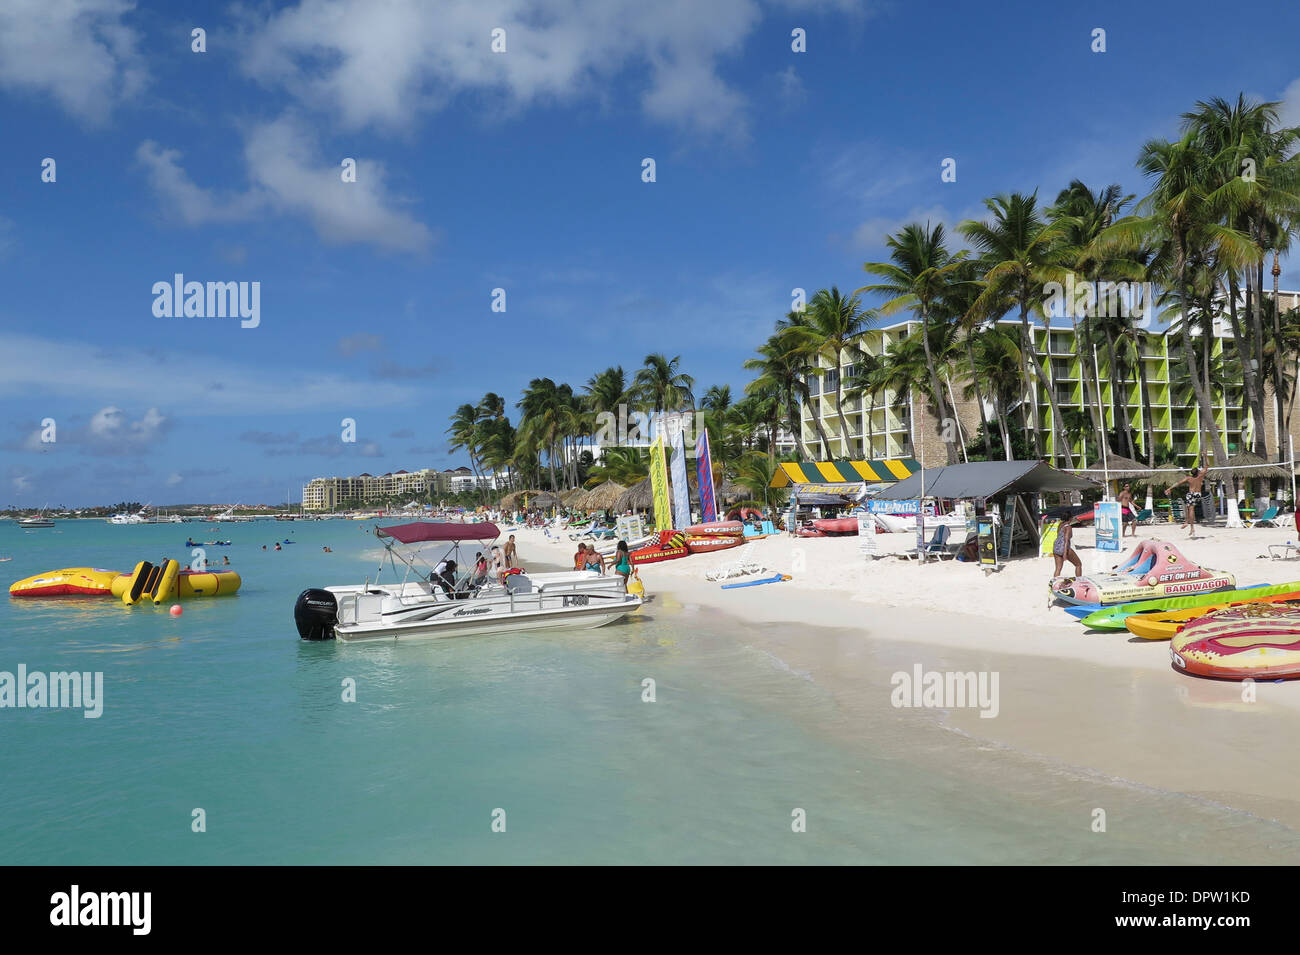 Holidaymakers enjoying water sports on Aruba's Palm Beach Stock Photo